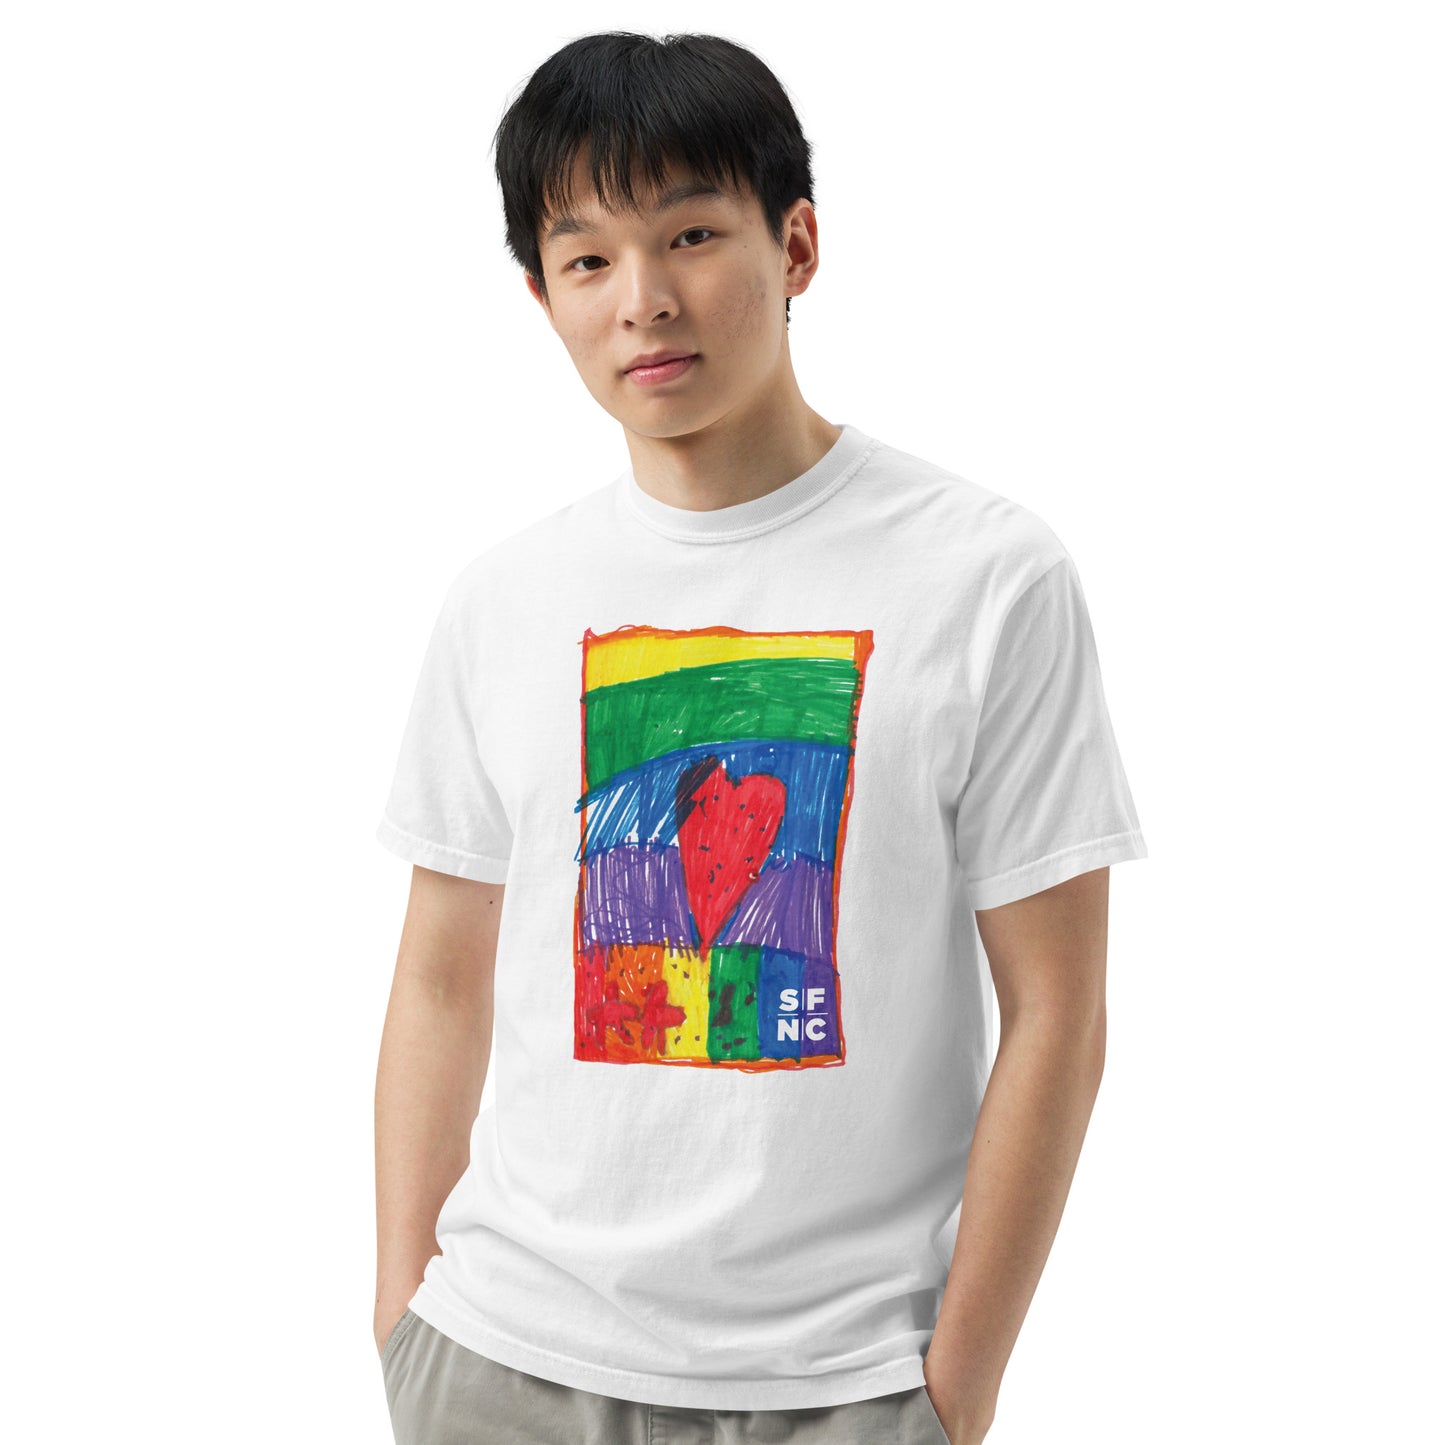 2022 Student-Designed SFNC T-Shirt